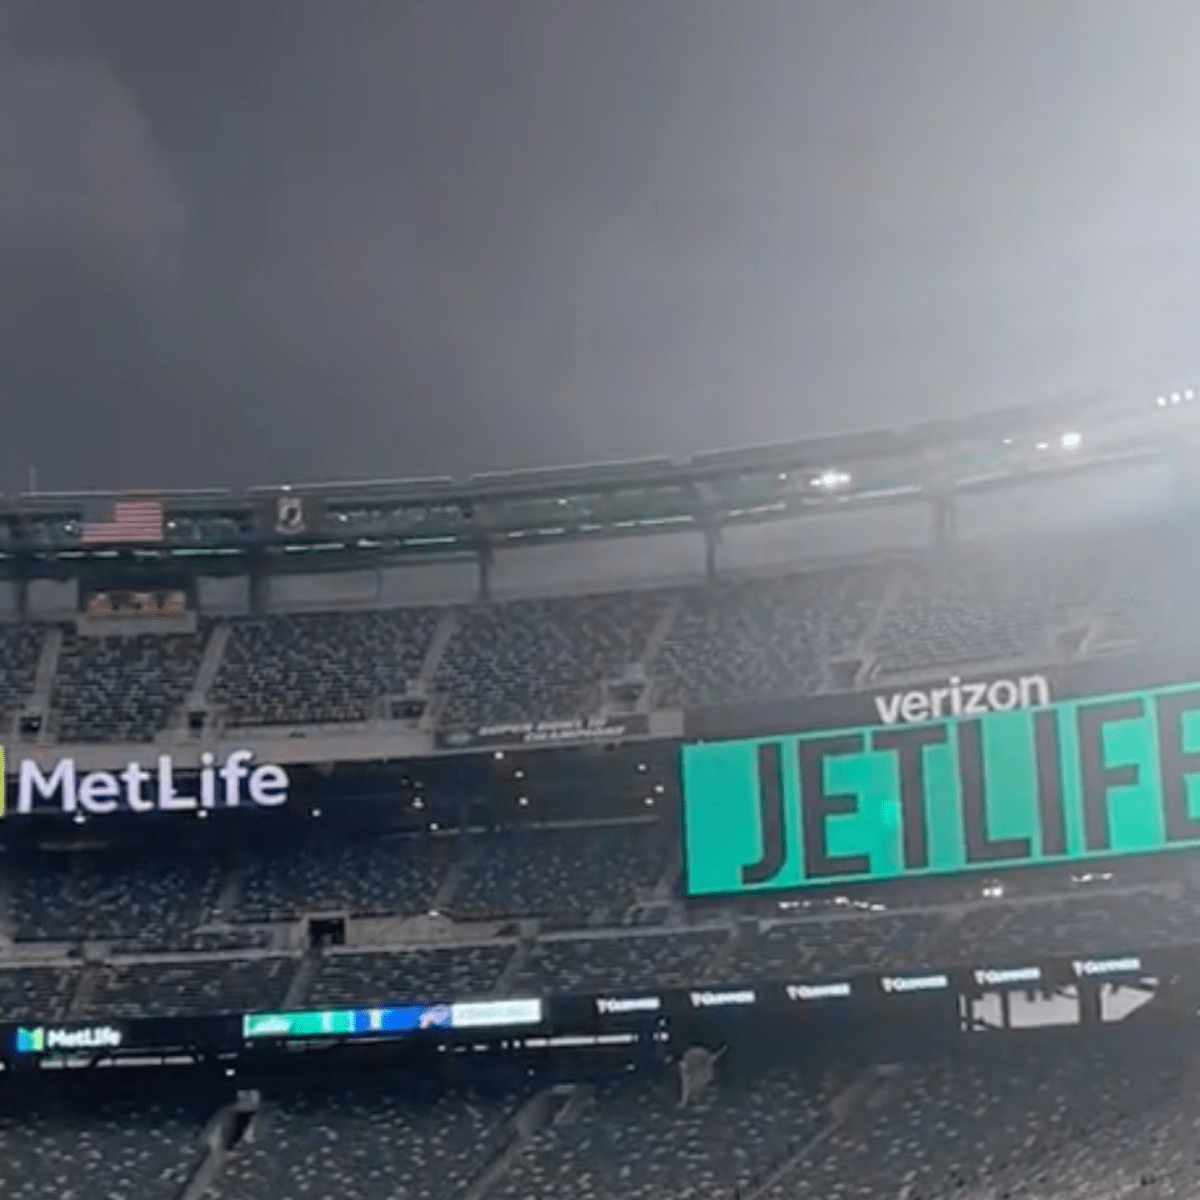 Jets-Bills at MetLife uses PixMob lighting tech